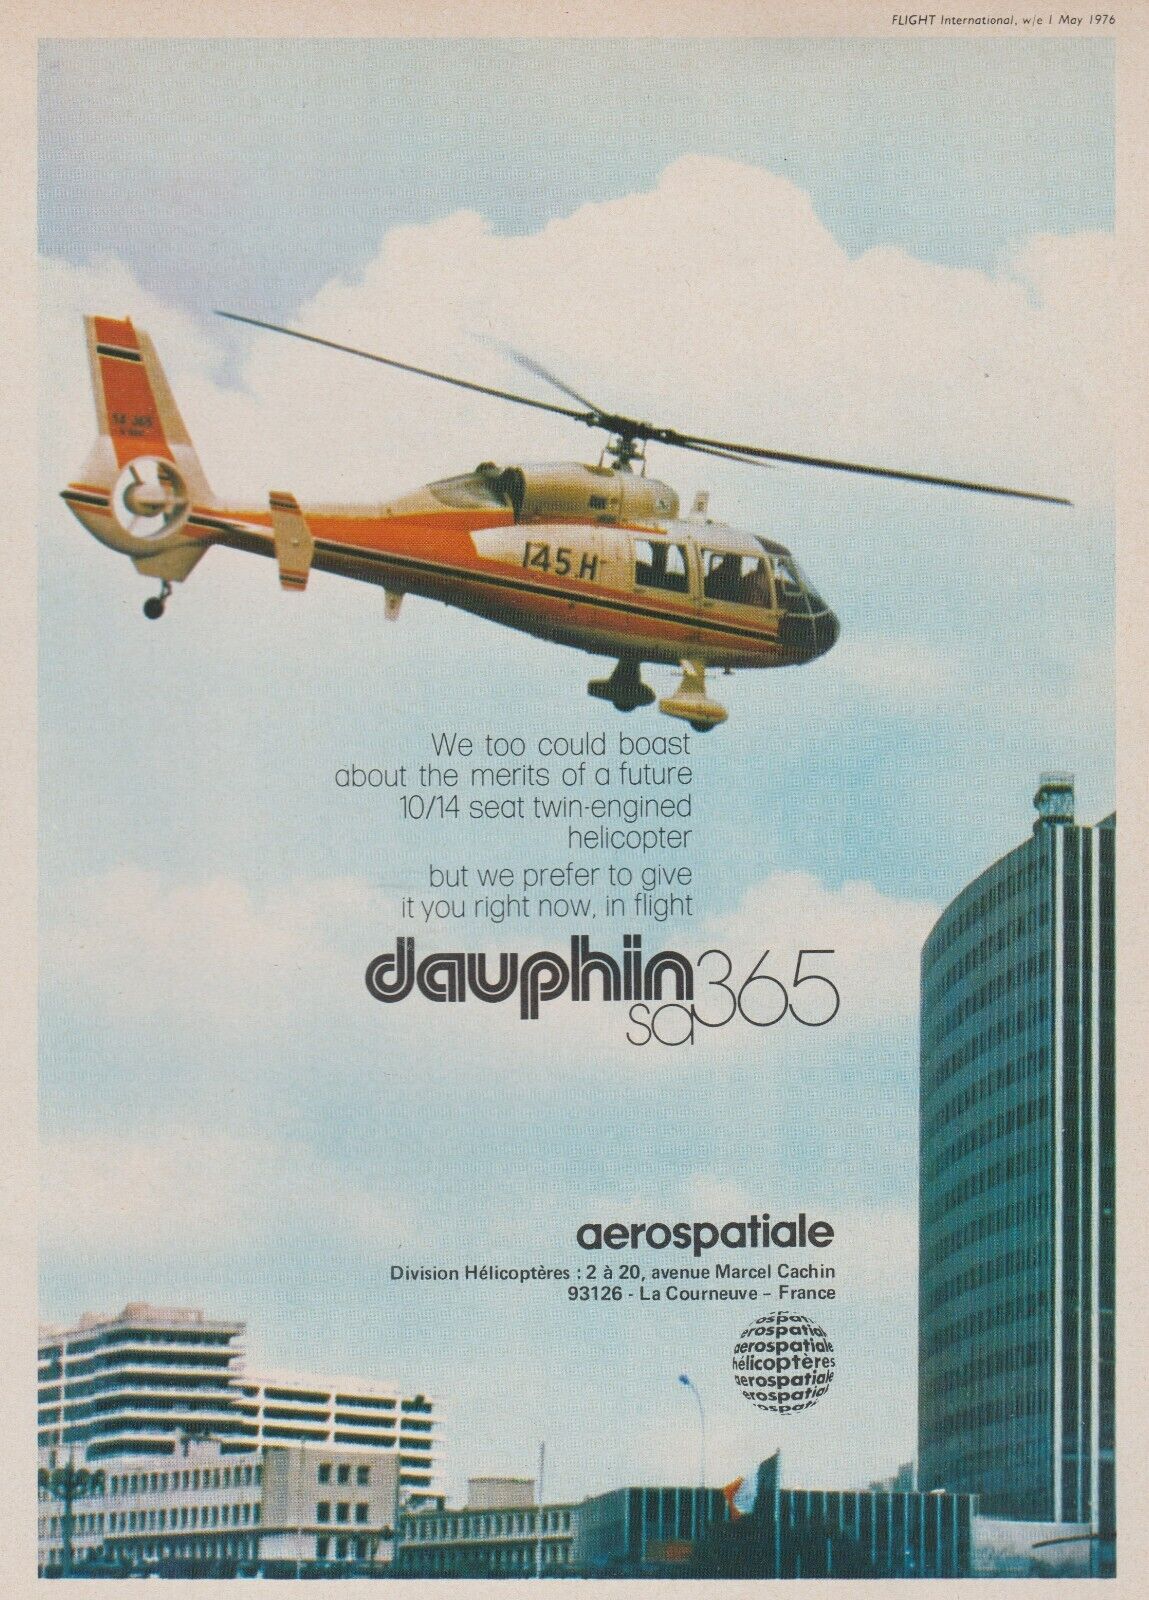 Aviation Magazine Print - Aerospatiale Dauphin 365 SA Helicopters (1976)